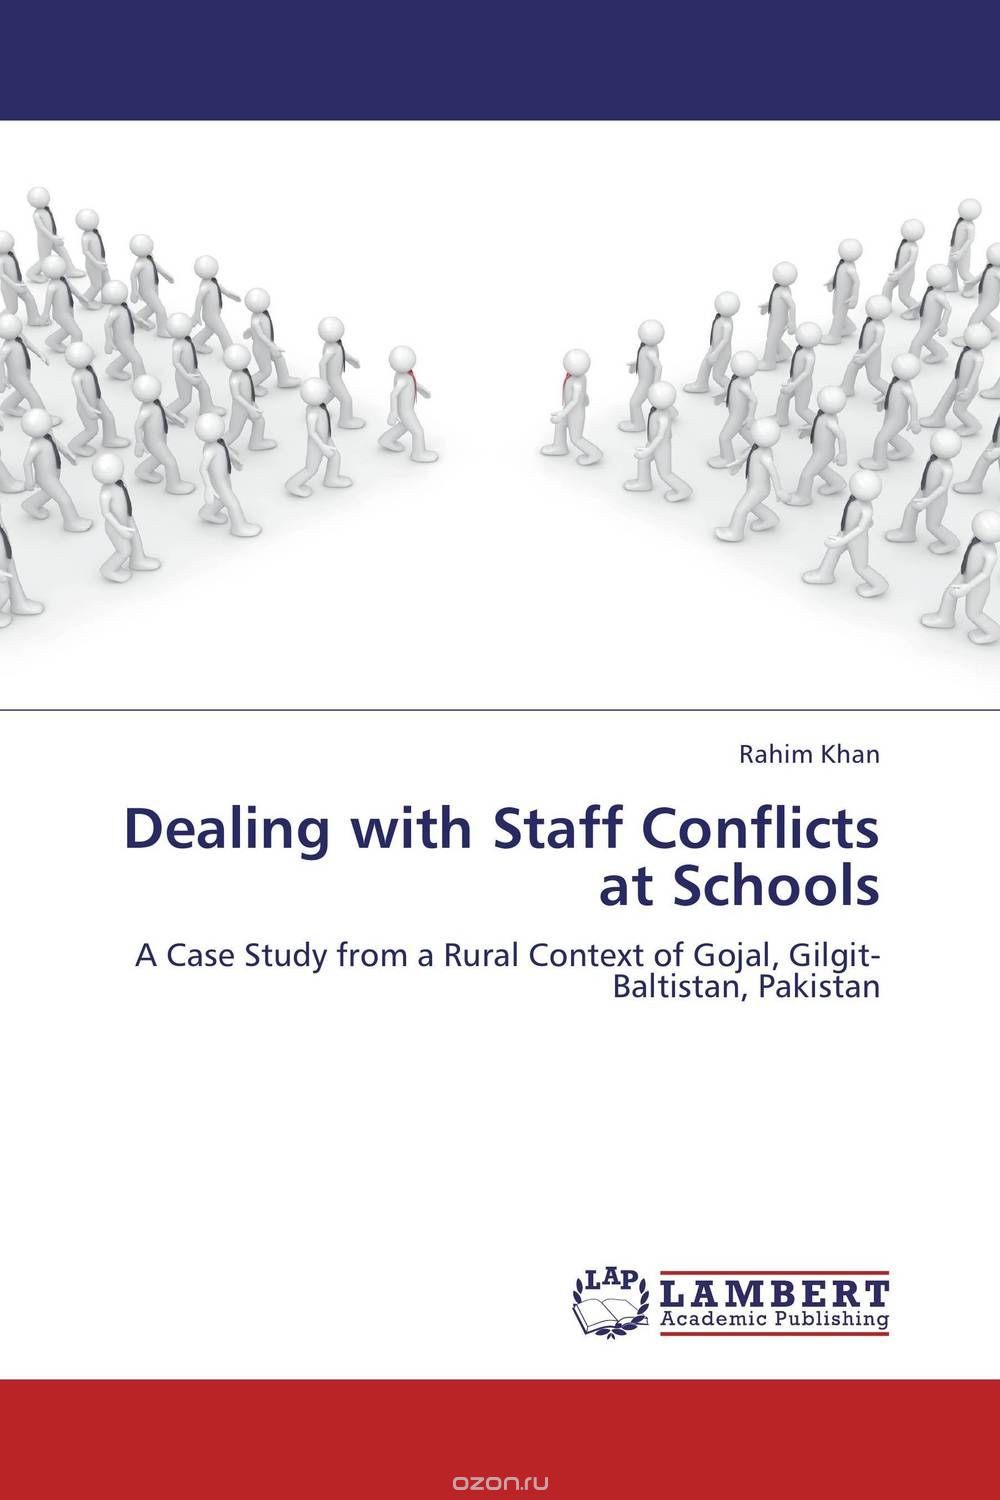 Скачать книгу "Dealing with Staff Conflicts at Schools"